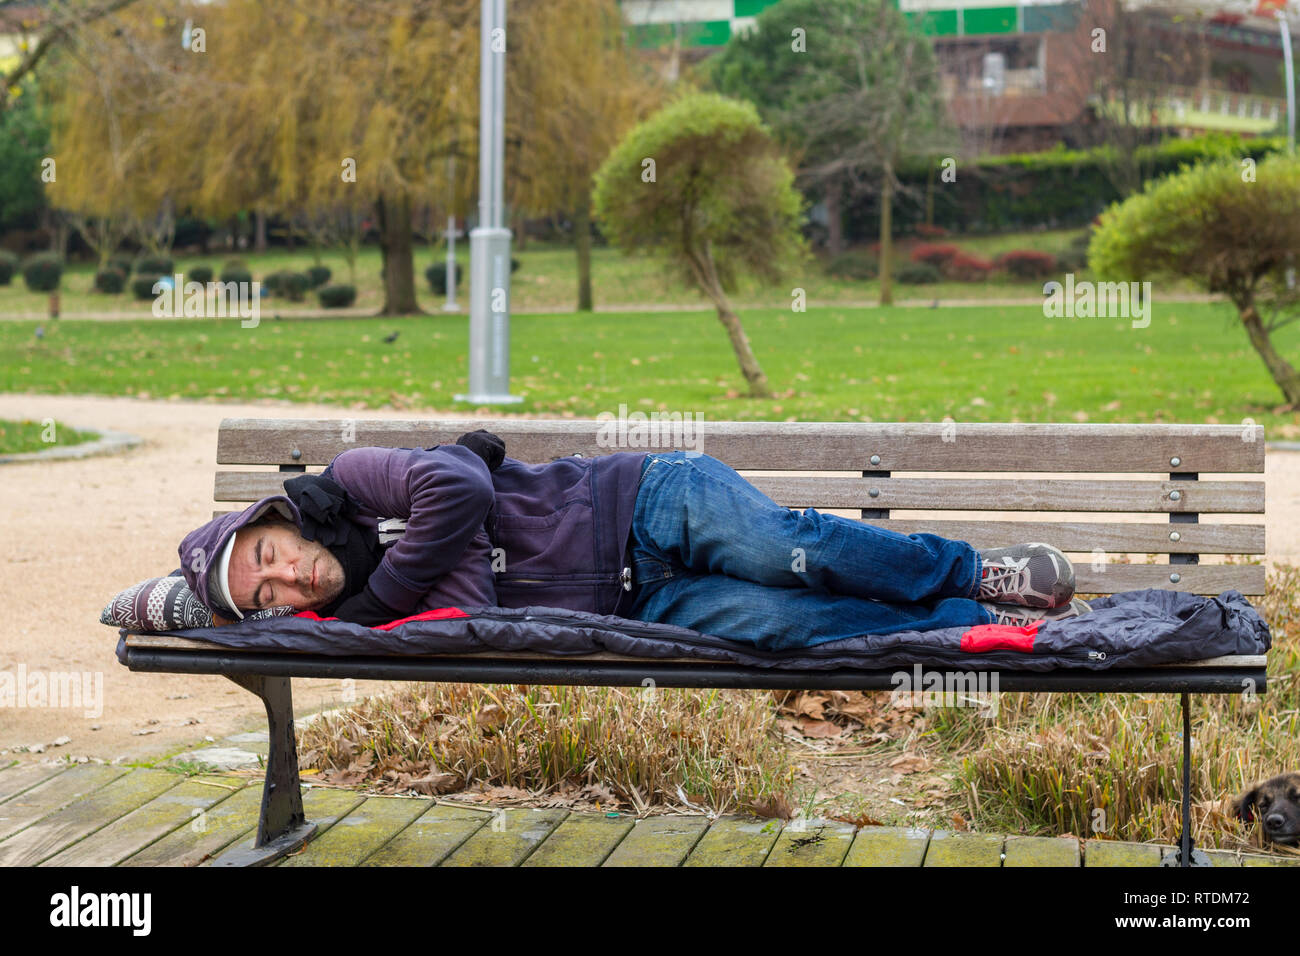 Homeless Man Sleeping On Bench At Park Stock Photo Alamy